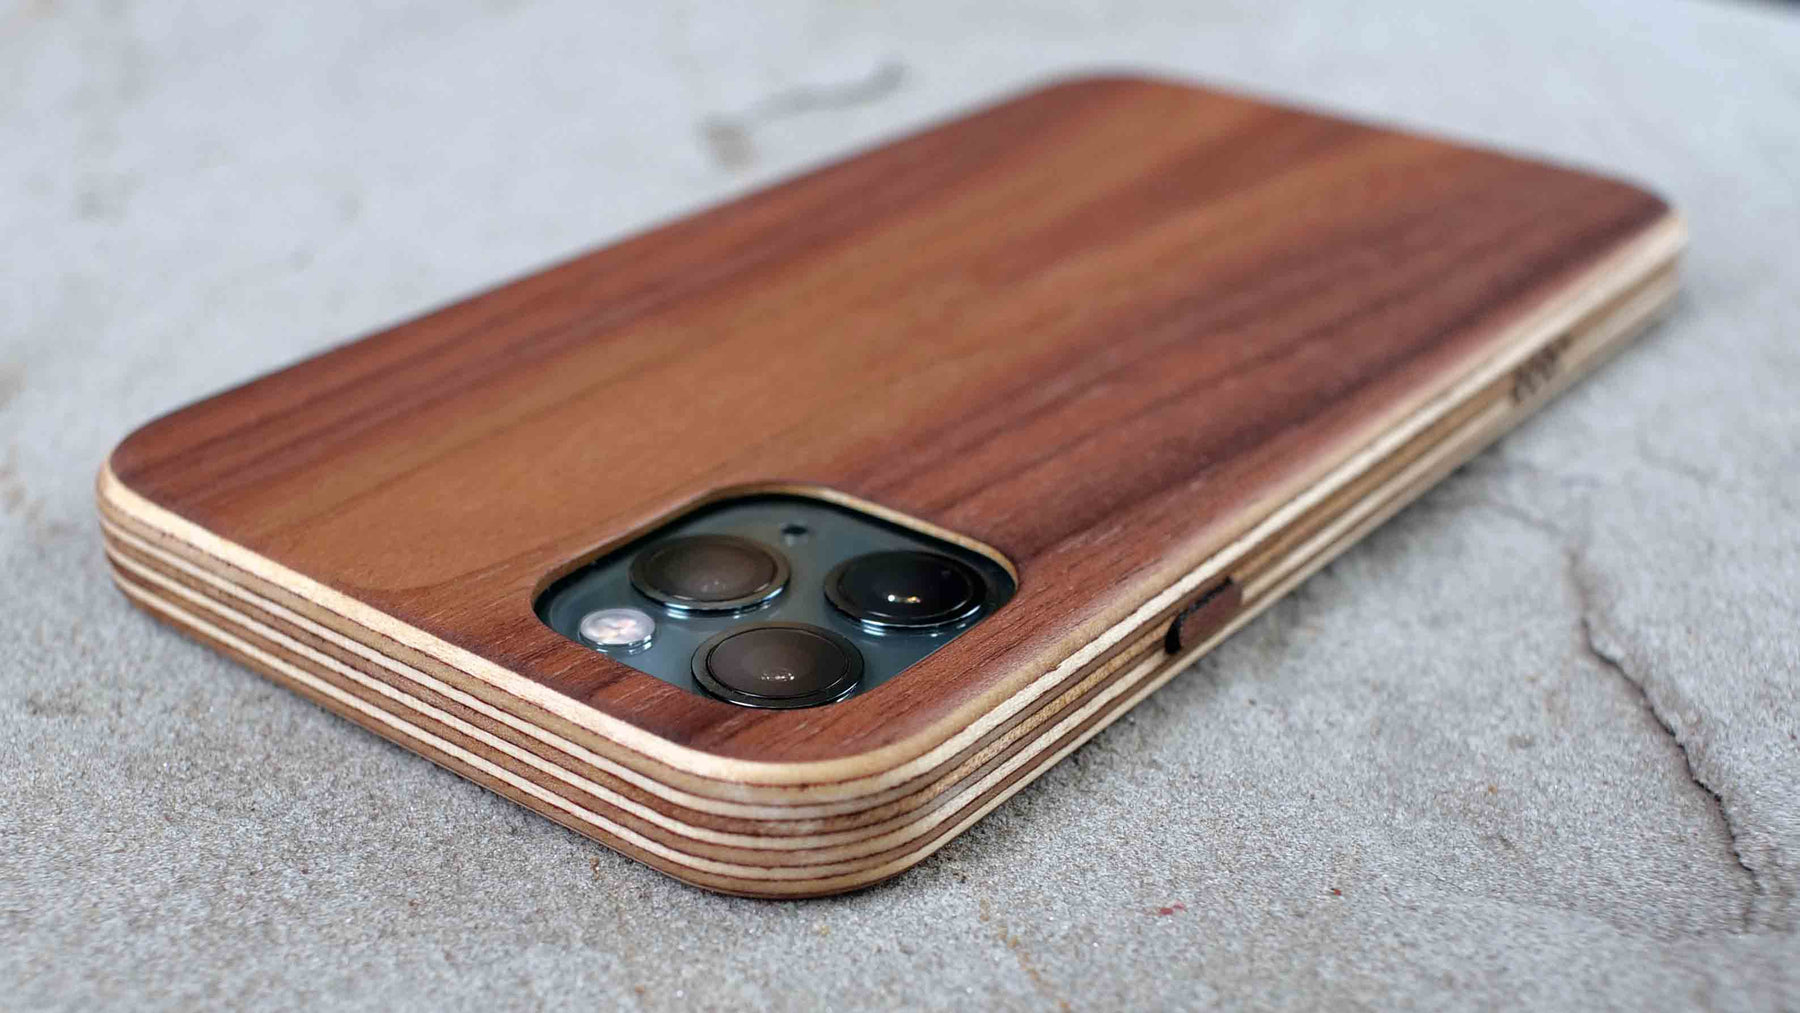 Plywood iPhone 11 Pro Case